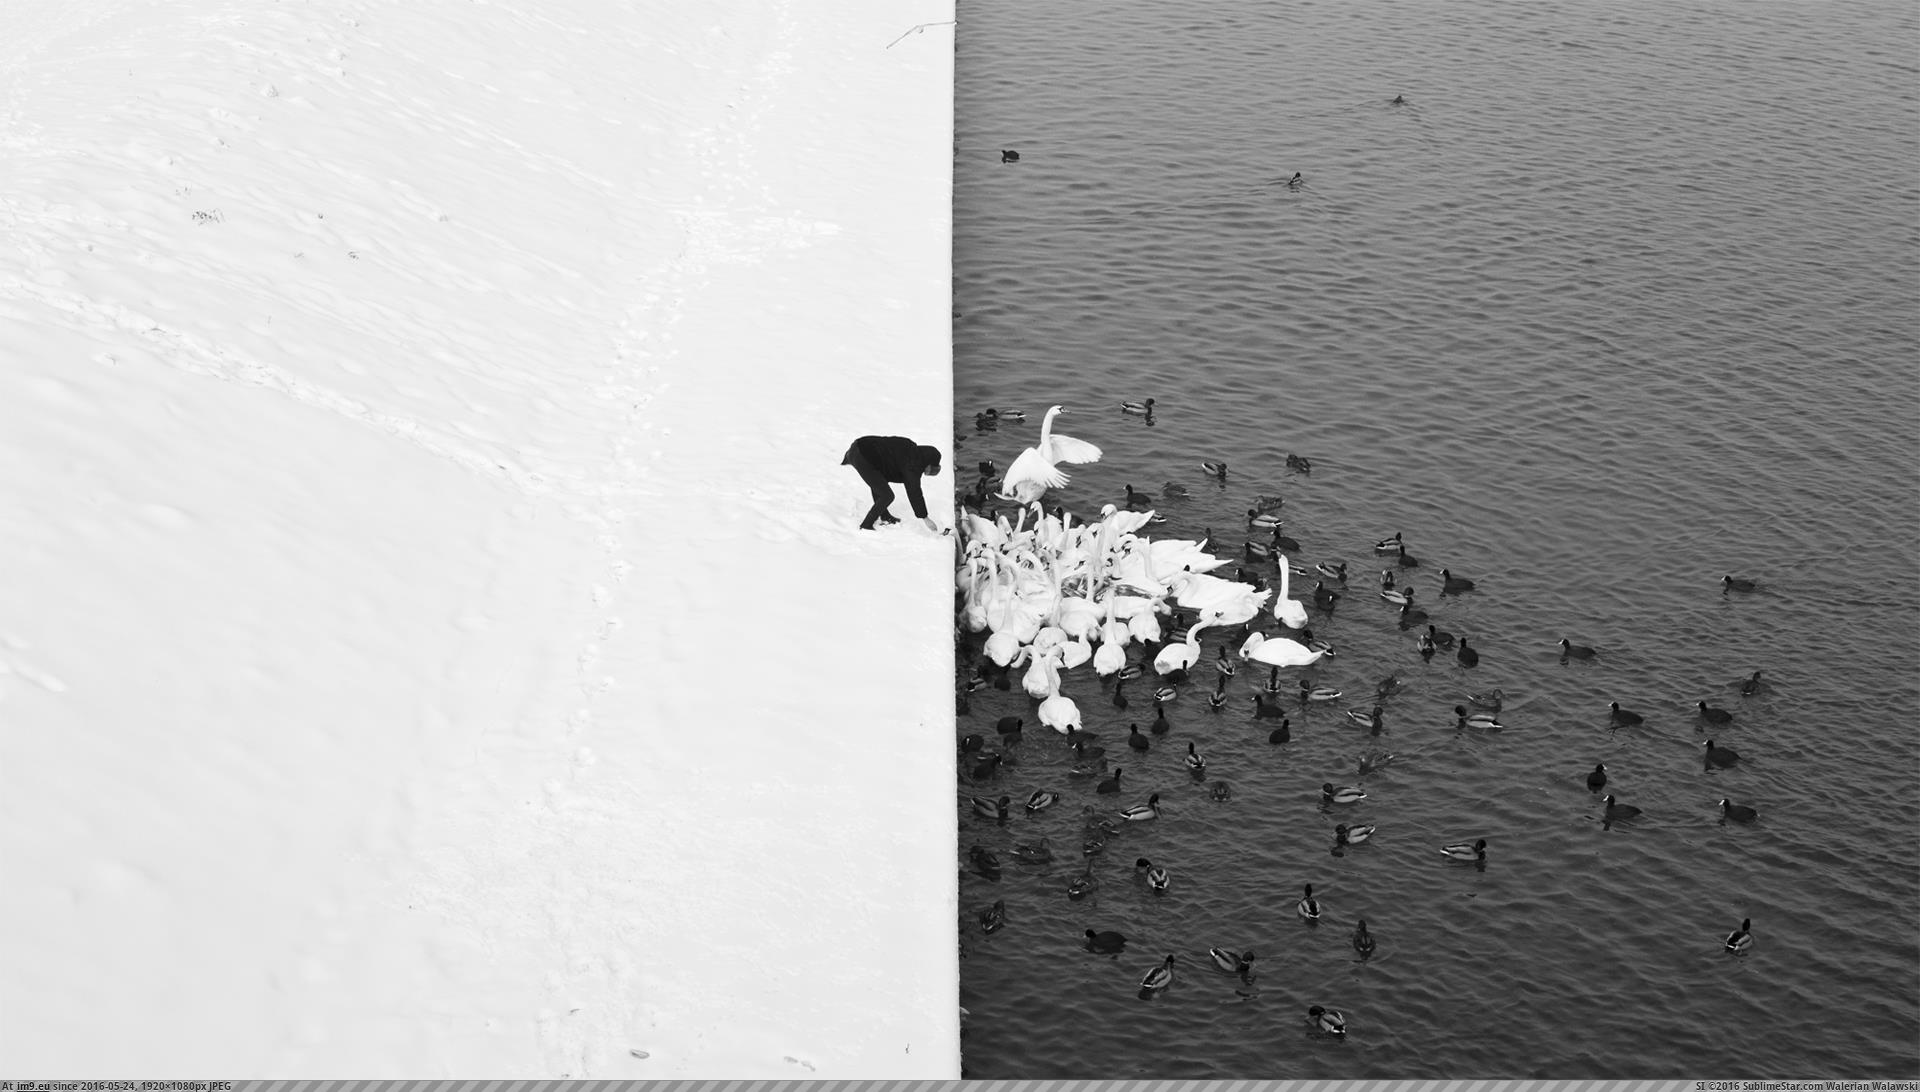 [Pics] 'A Man Feeding Swans in the Snow' by Marcin Ryczek (in My r/PICS favs)